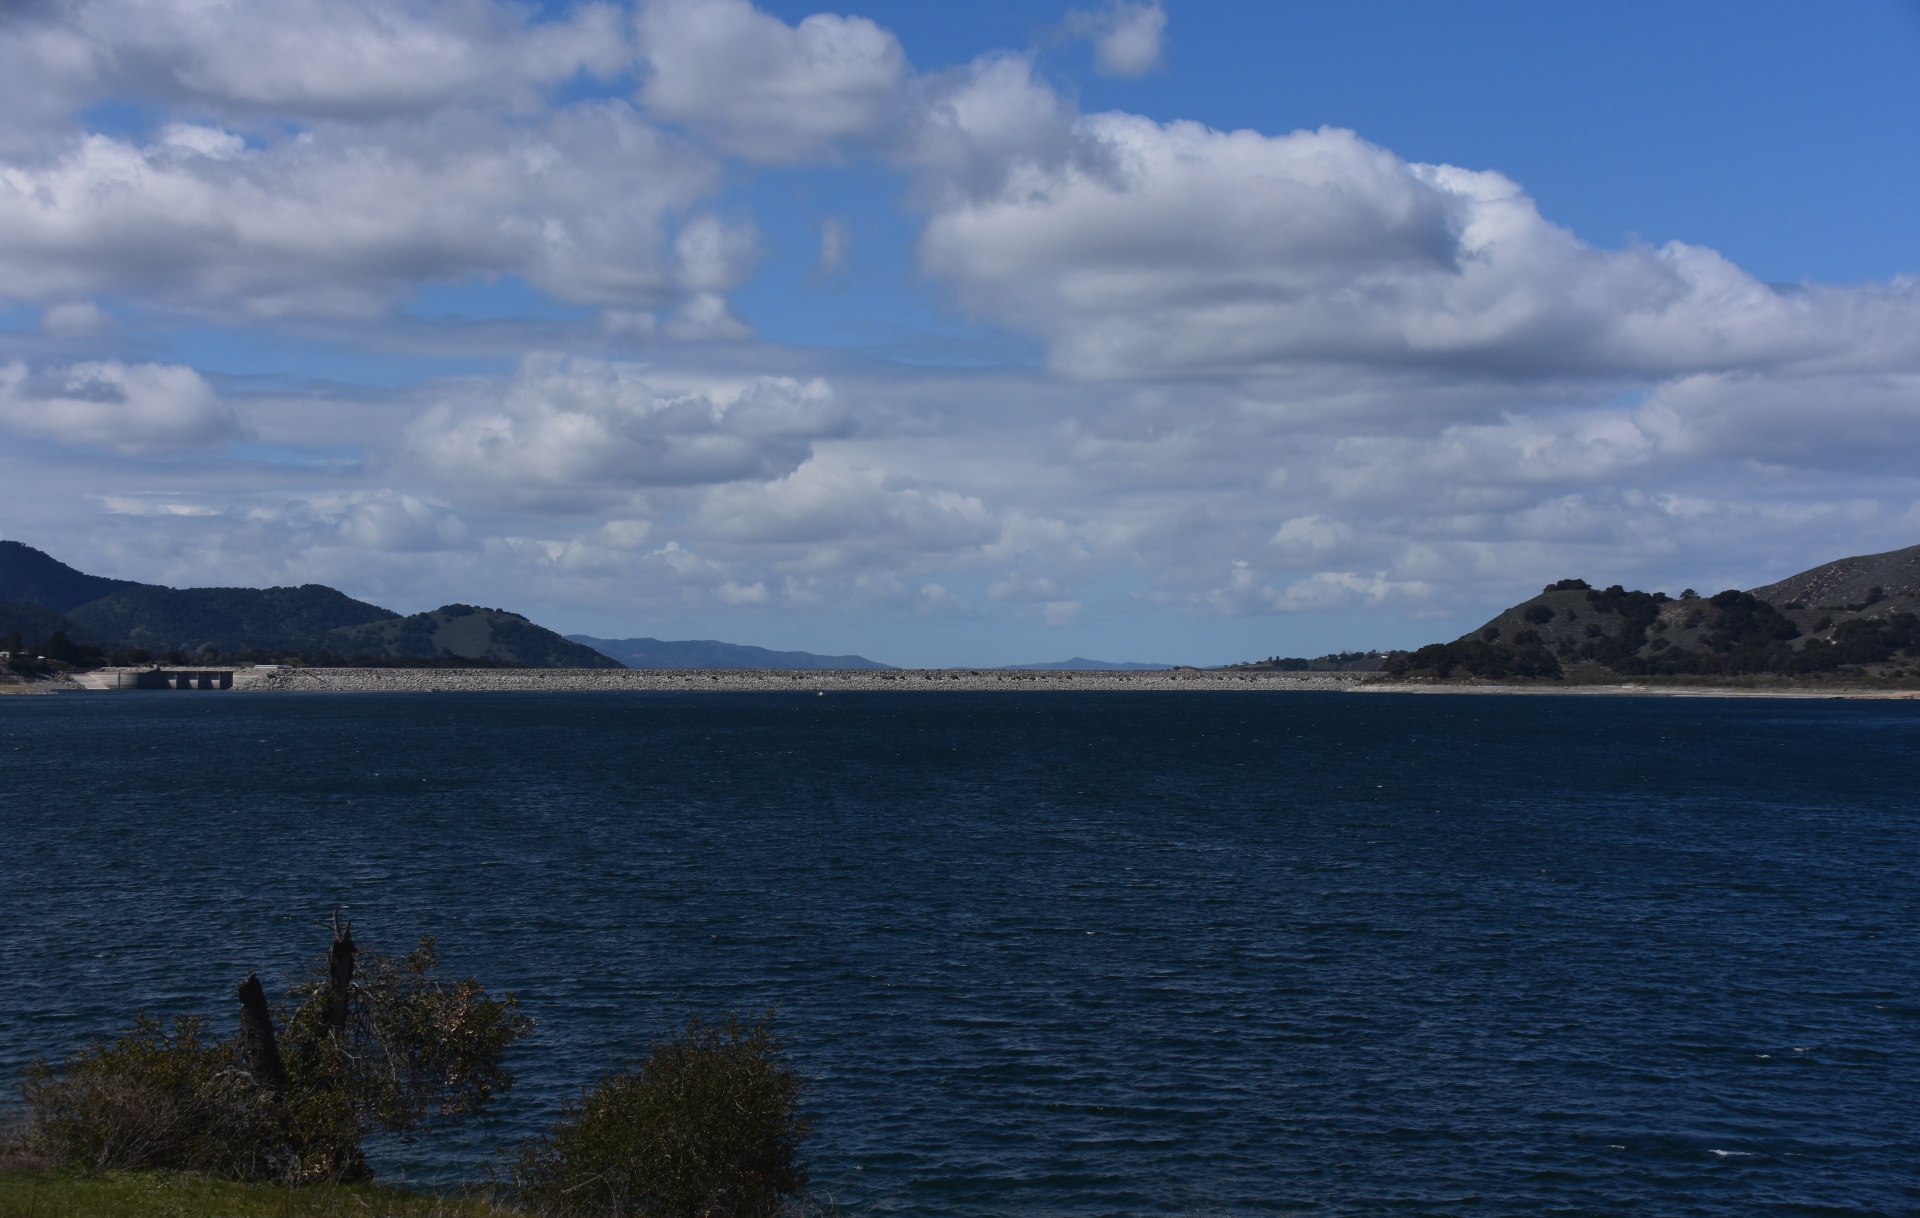 bradbury dam visible across the large lake reservoir of Lake Cachuma